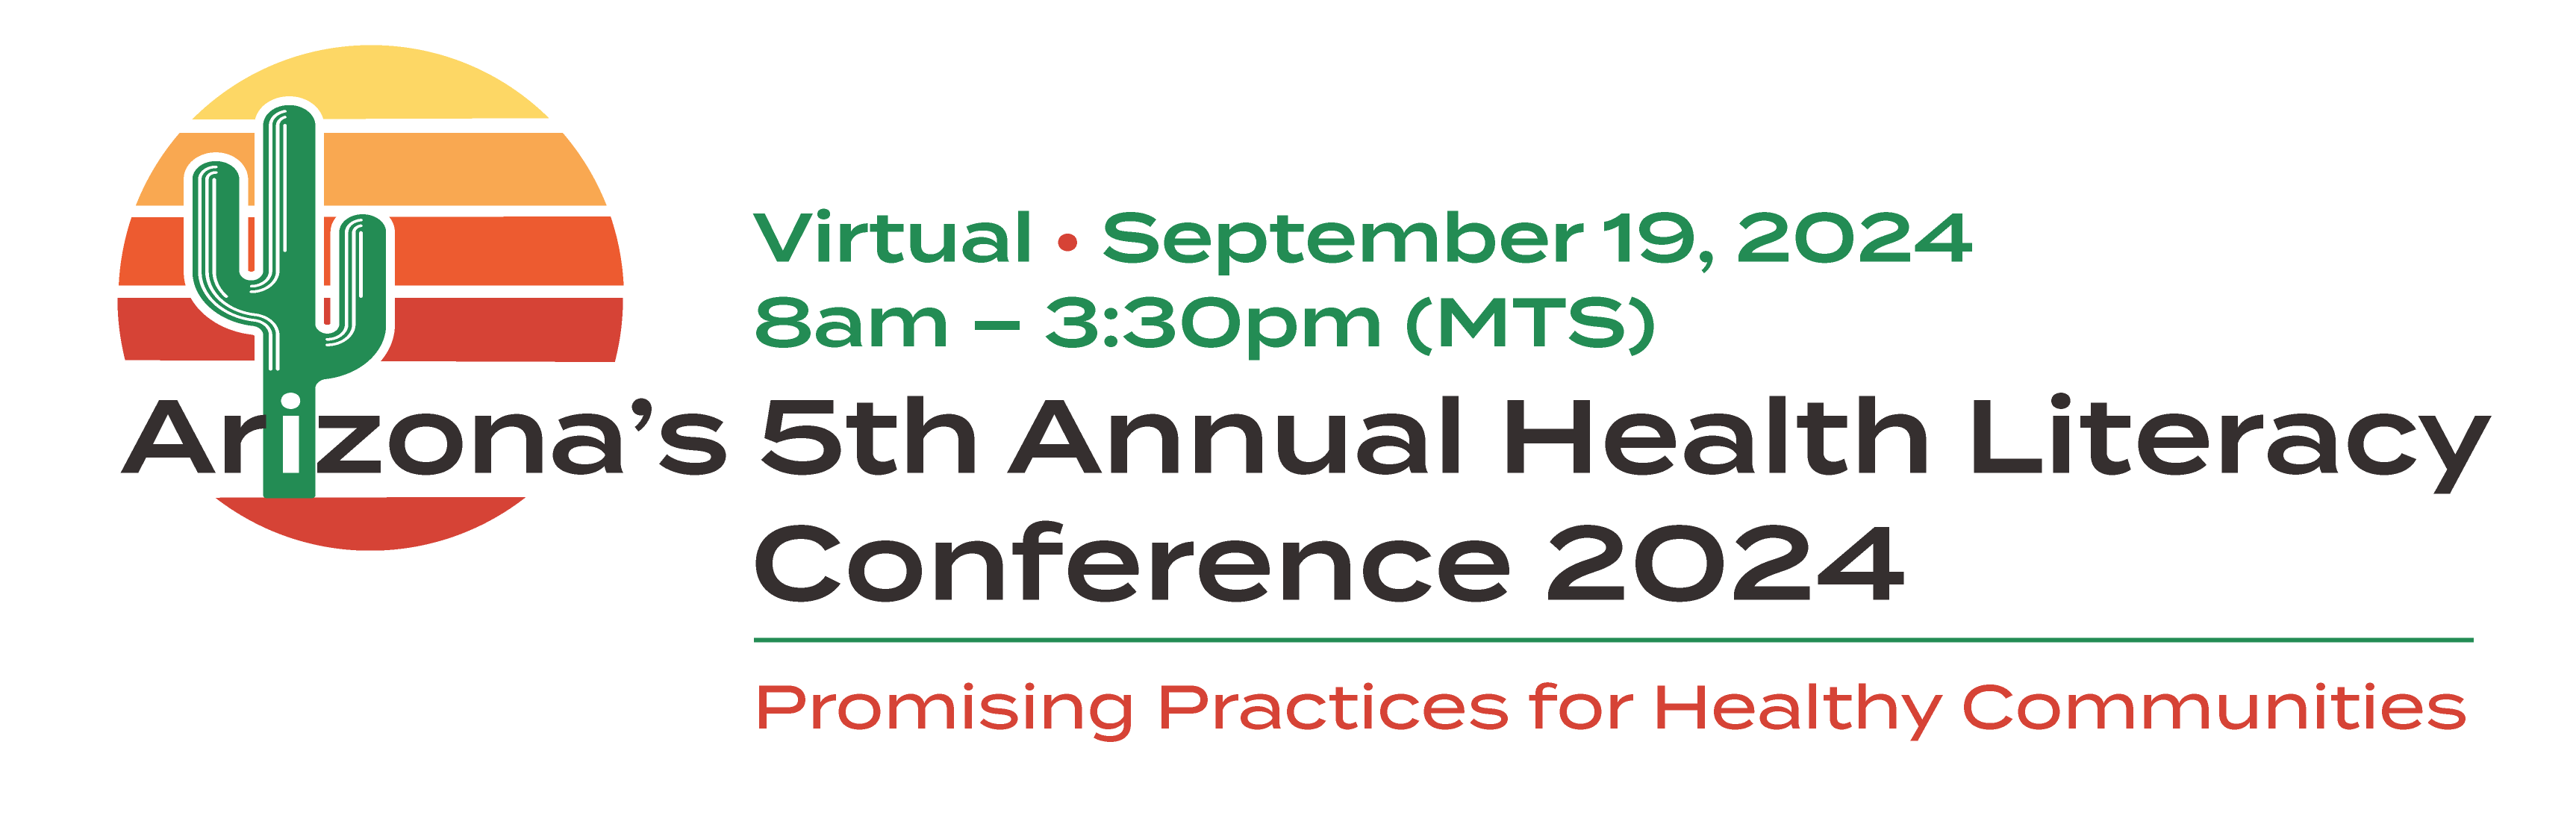 Arizona health literacy conference 2024